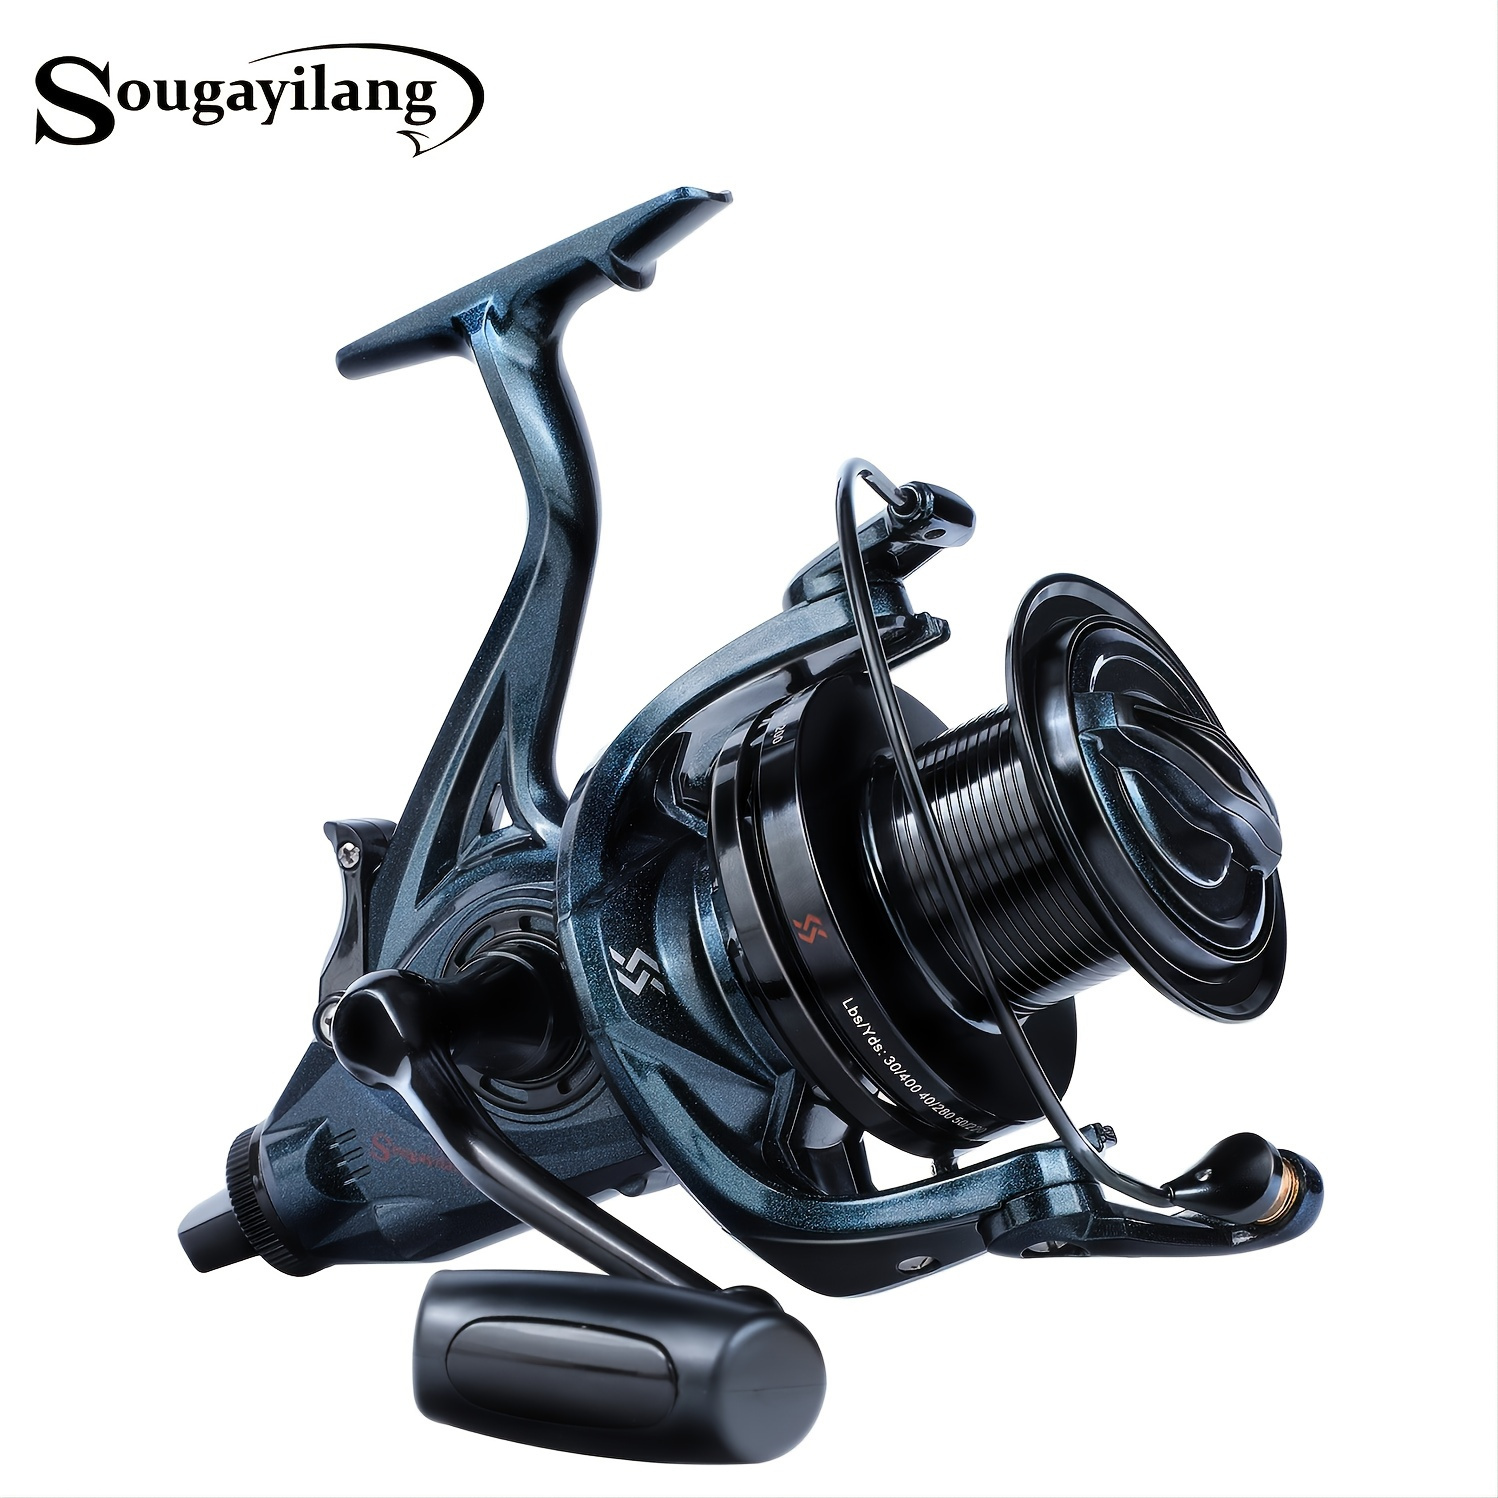 

Sougayilang 9000-12000 Series Spinning Reel - Max Drag 25kg For Carp, Surf, Freshwater, Saltwater, And Sea Fishing